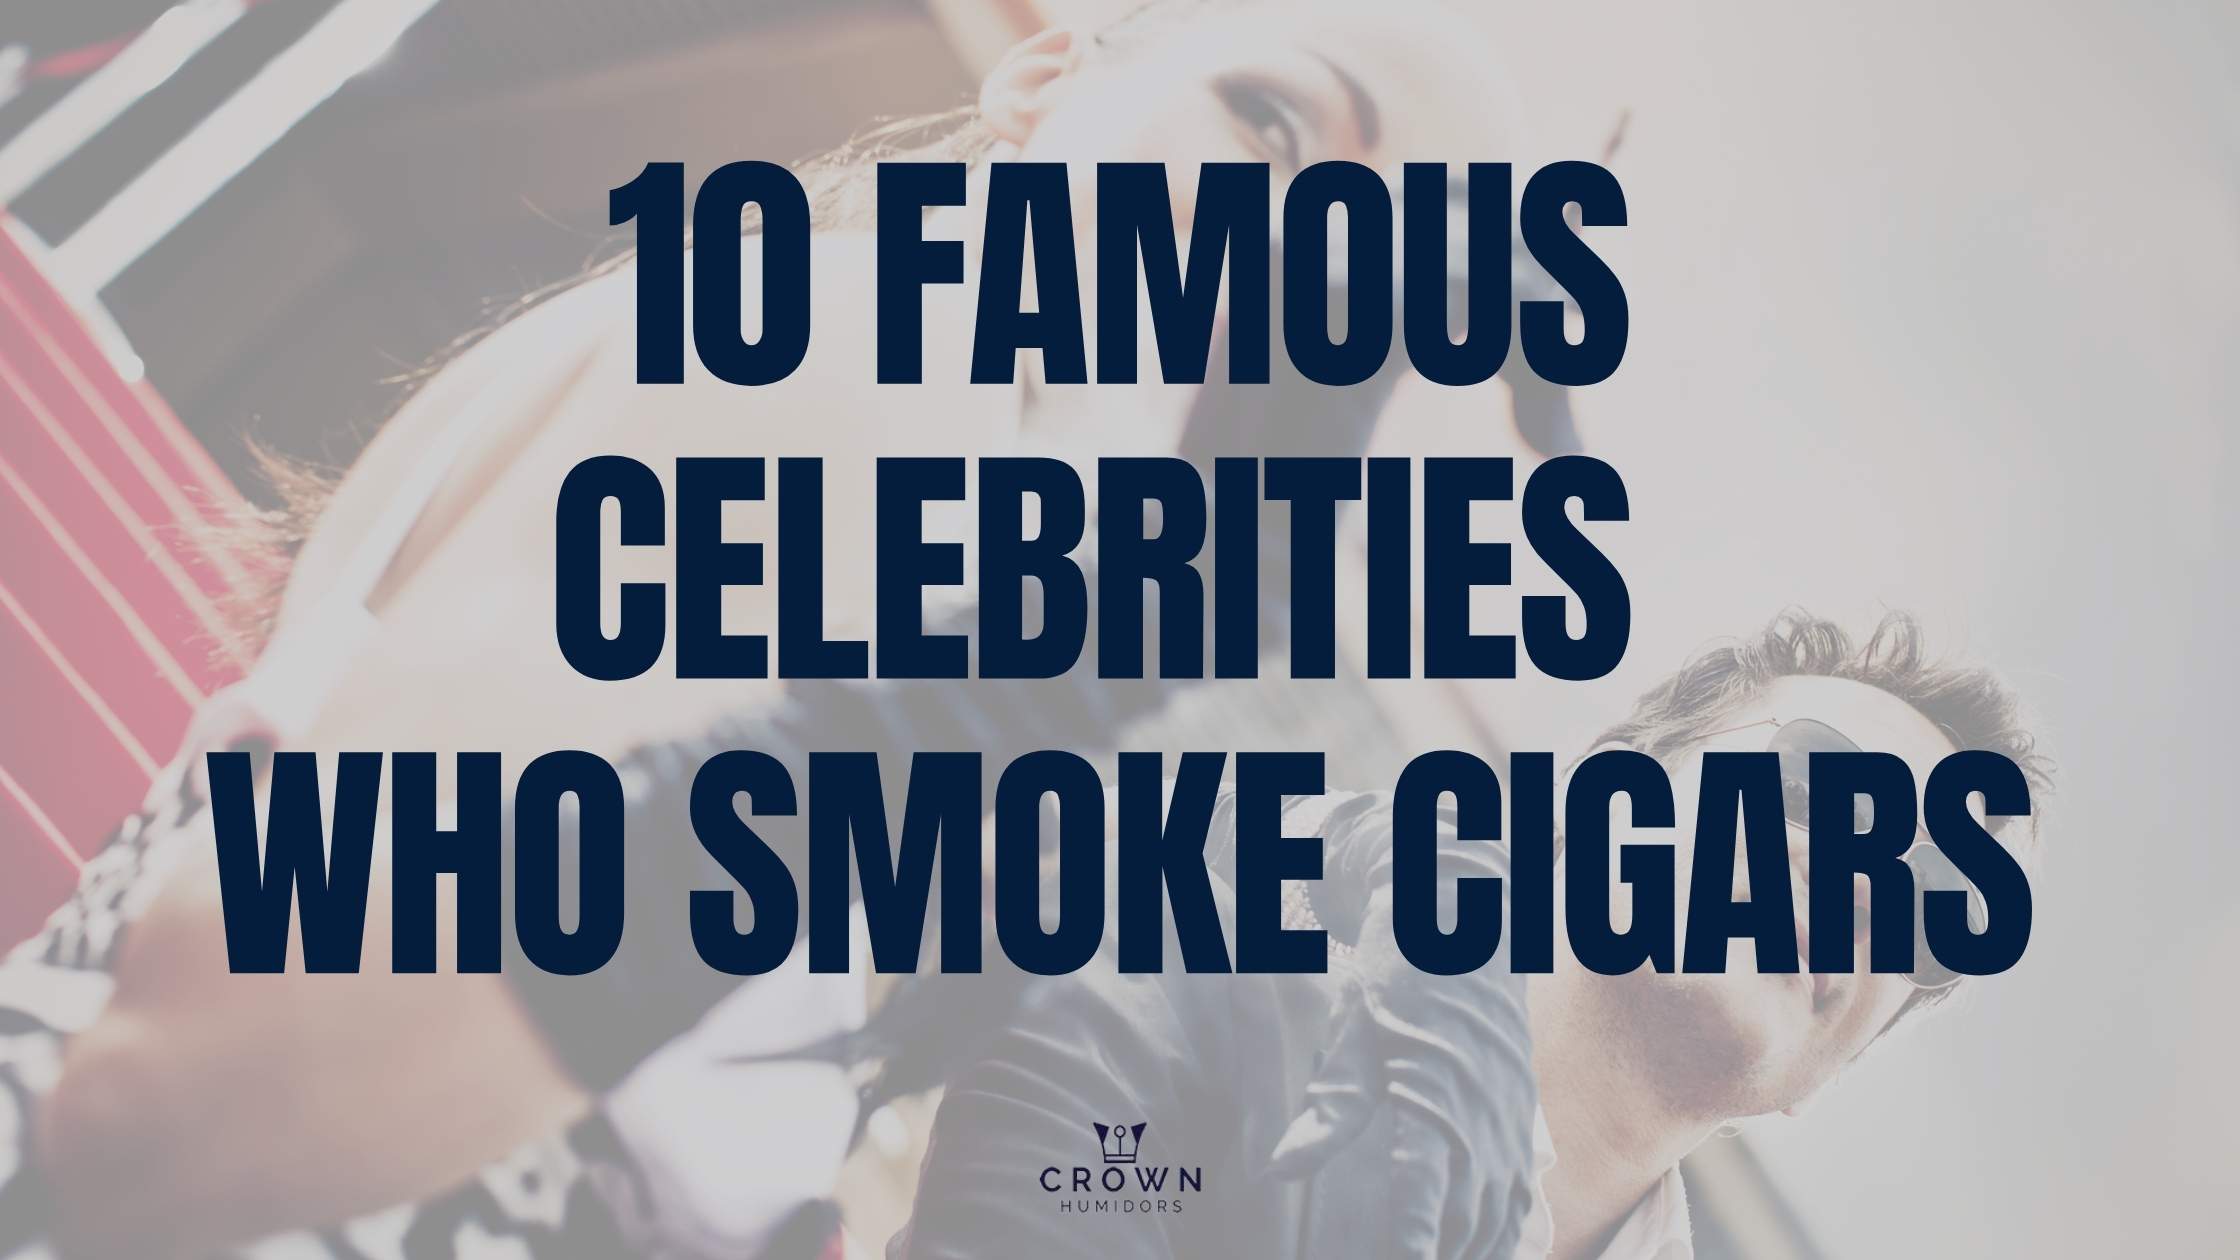 10 famous celebrities who smoke cigars